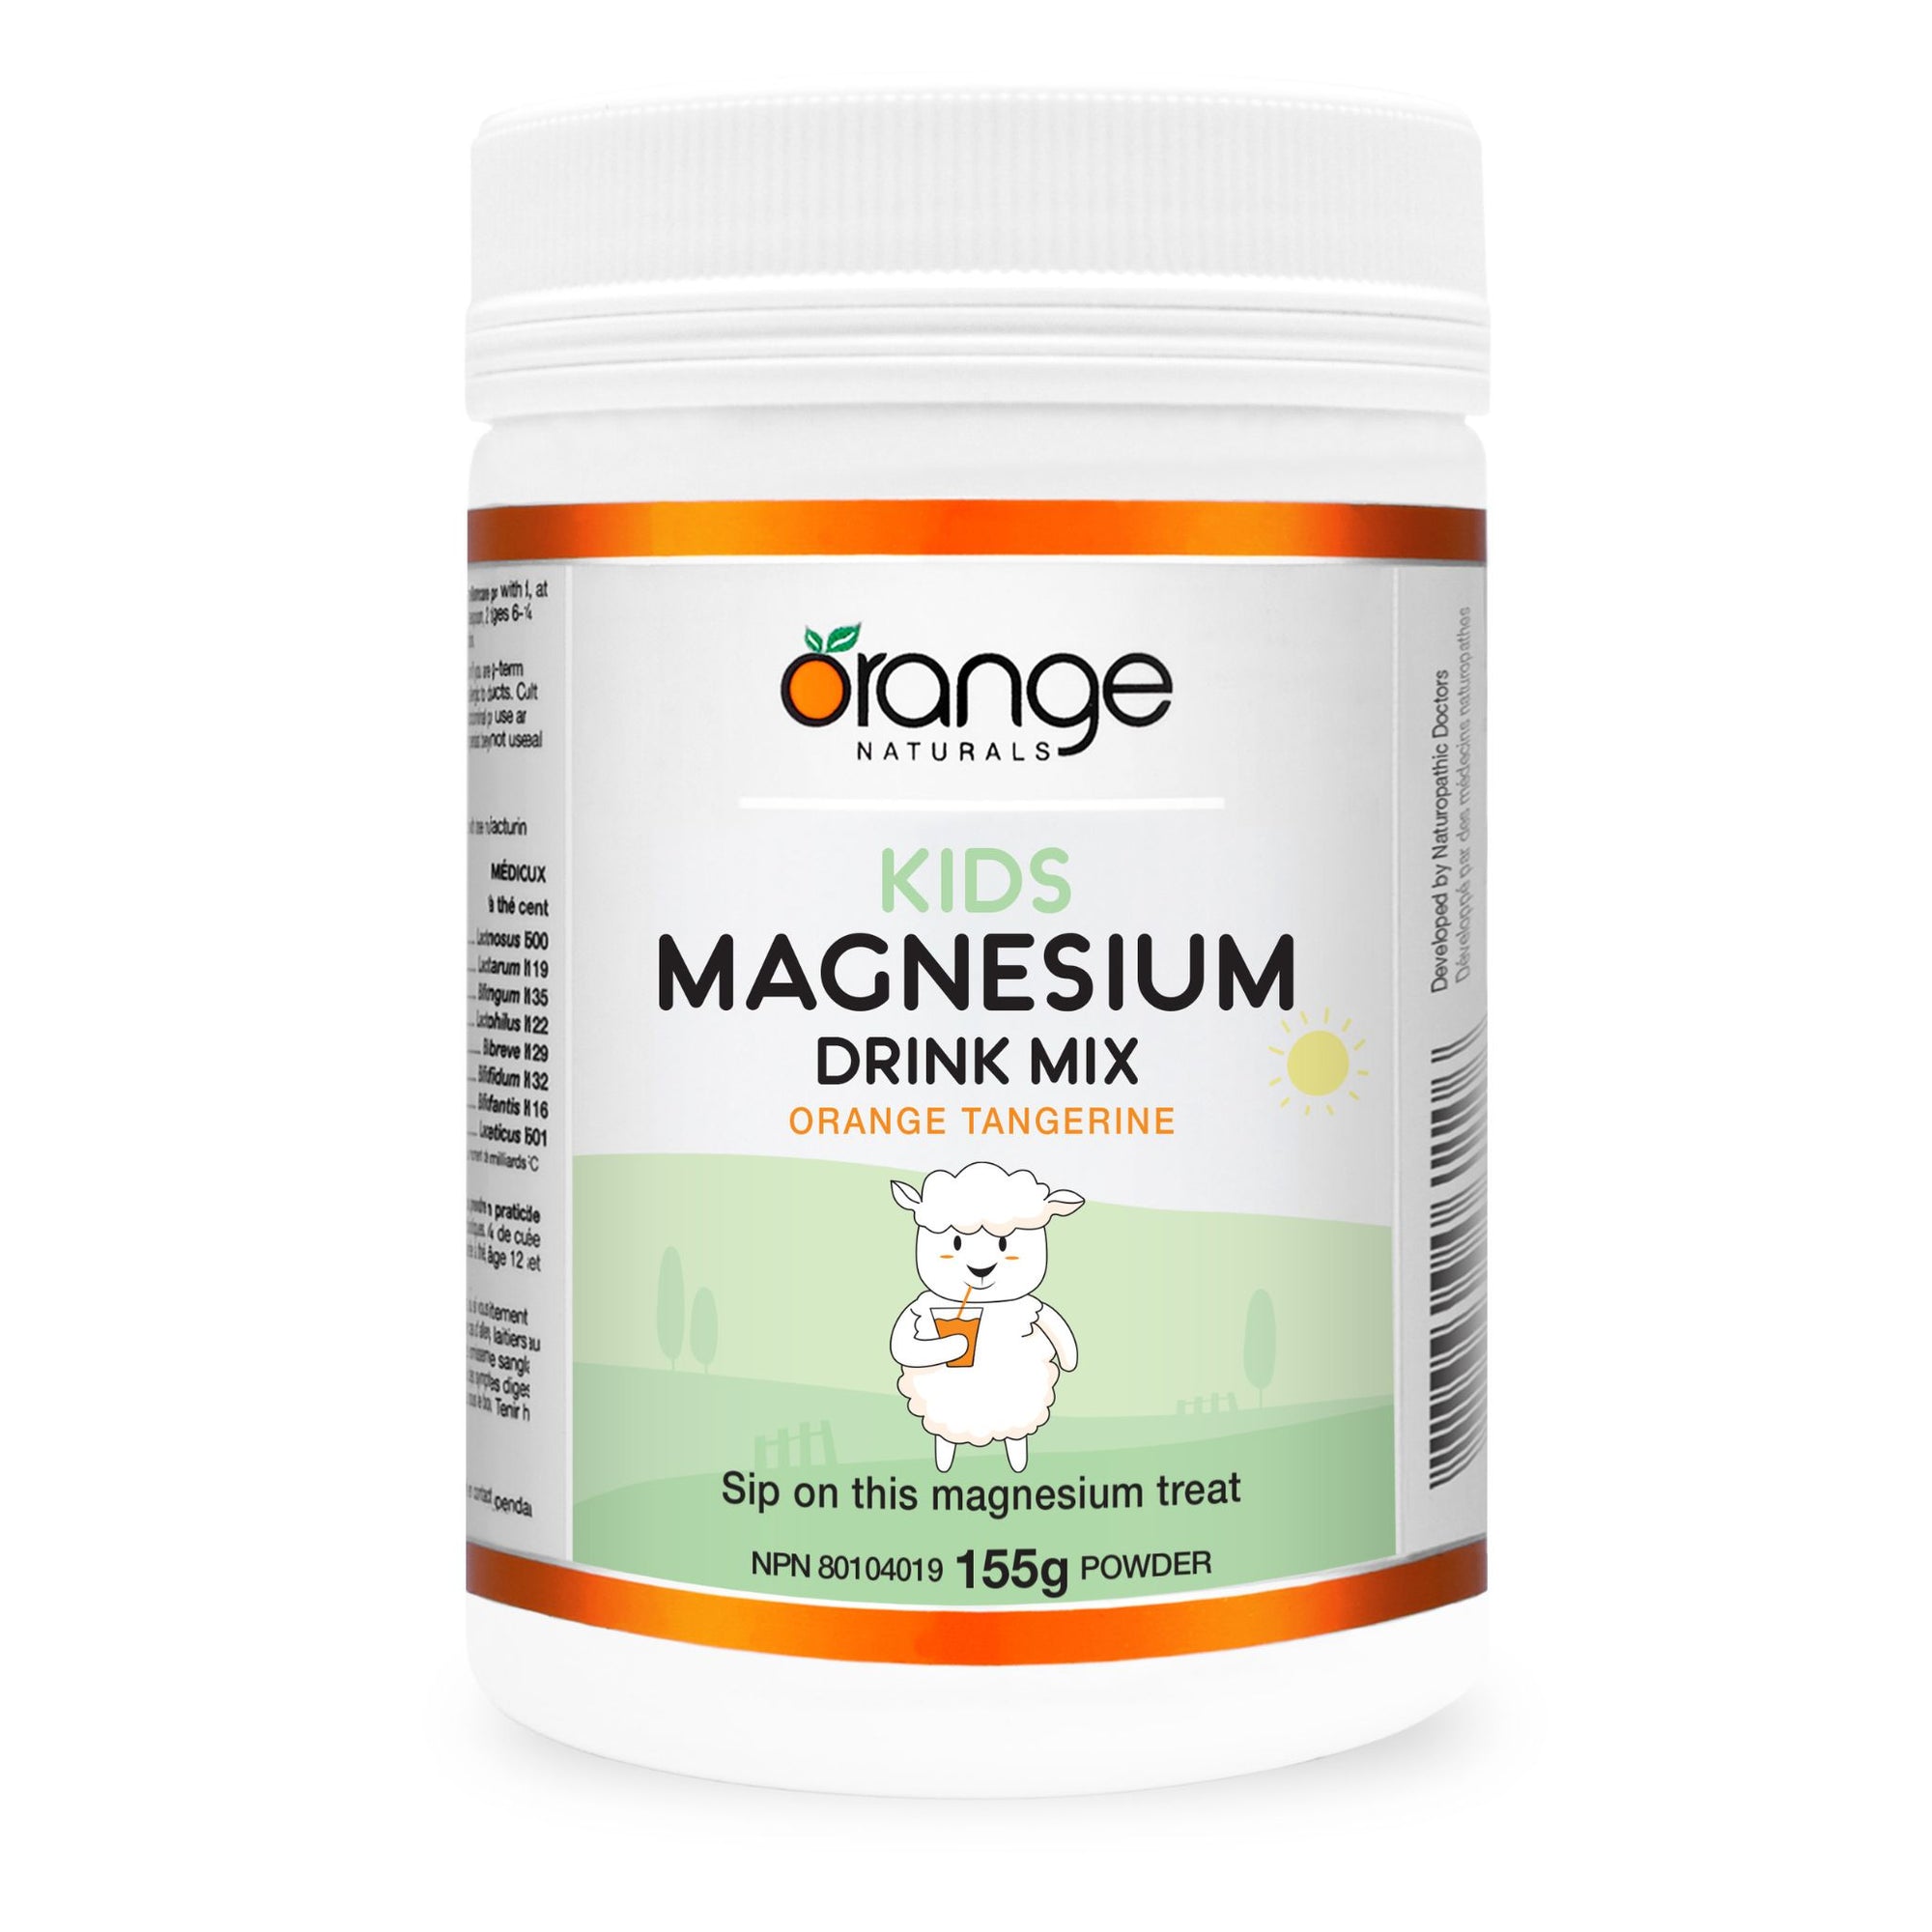 Orange Naturals Kids Magnesium Drink Mix - Orange Tangerine 155g